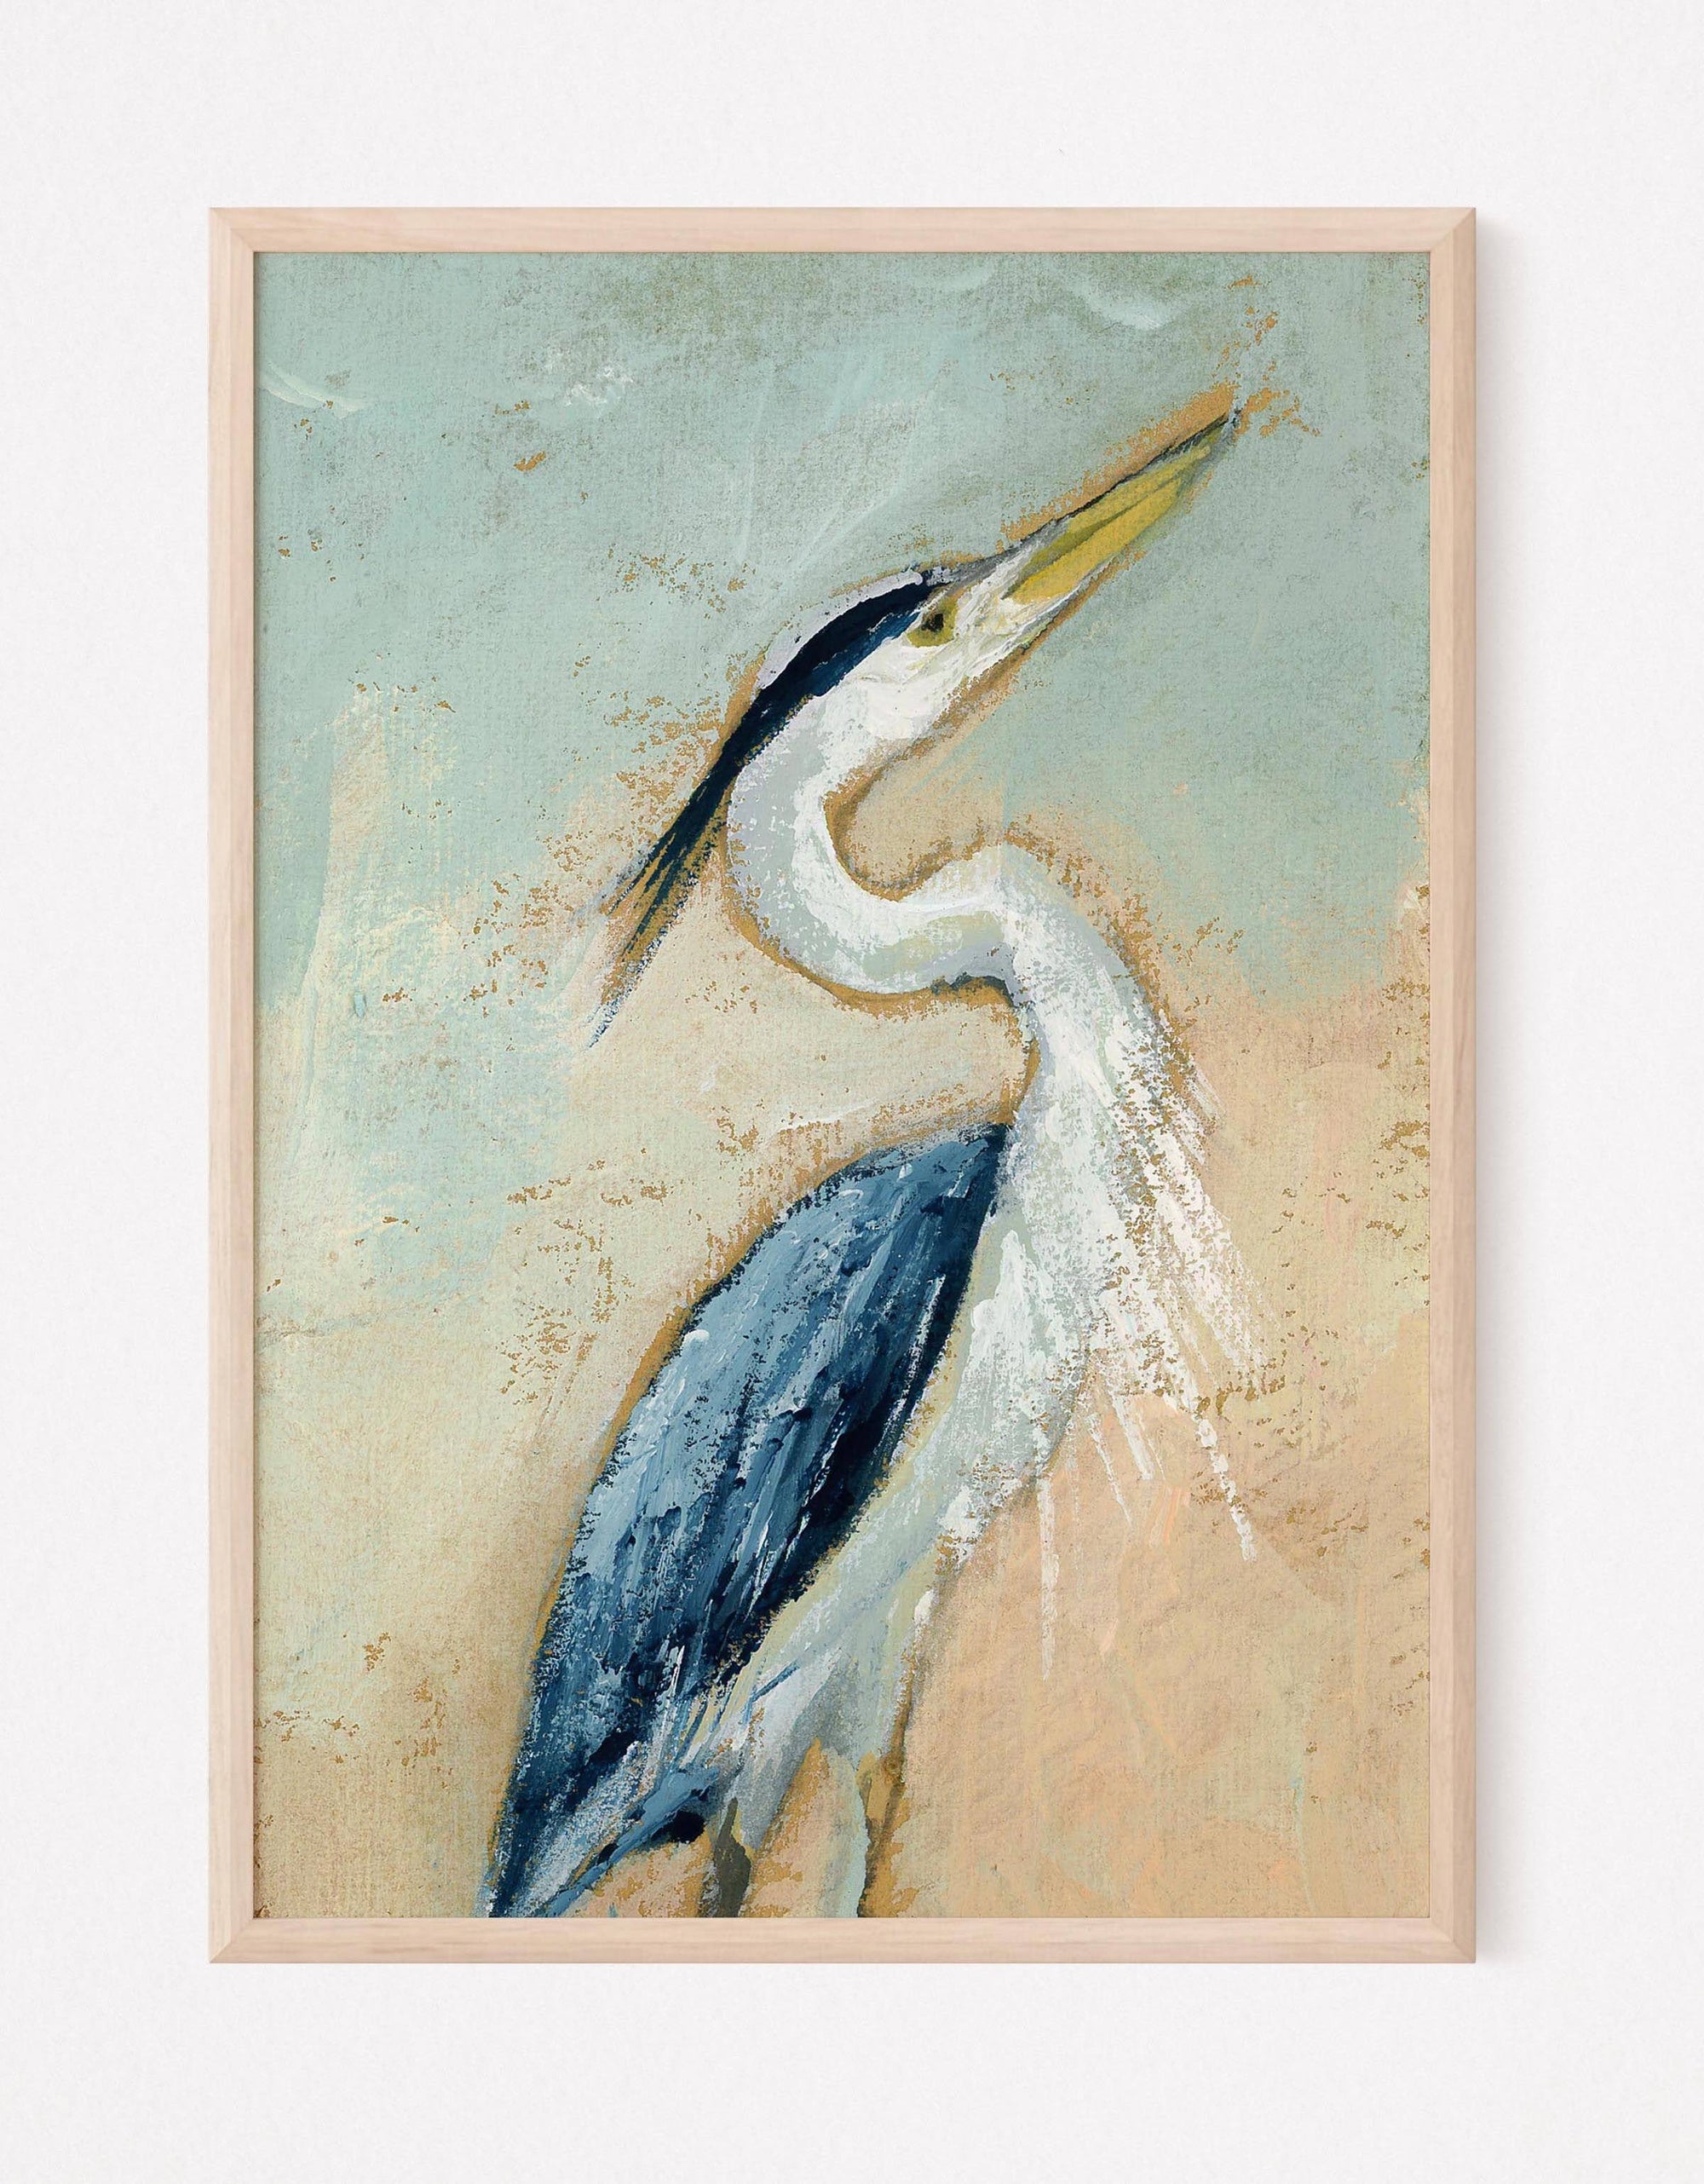 Will, a Blue Heron Vertical Print